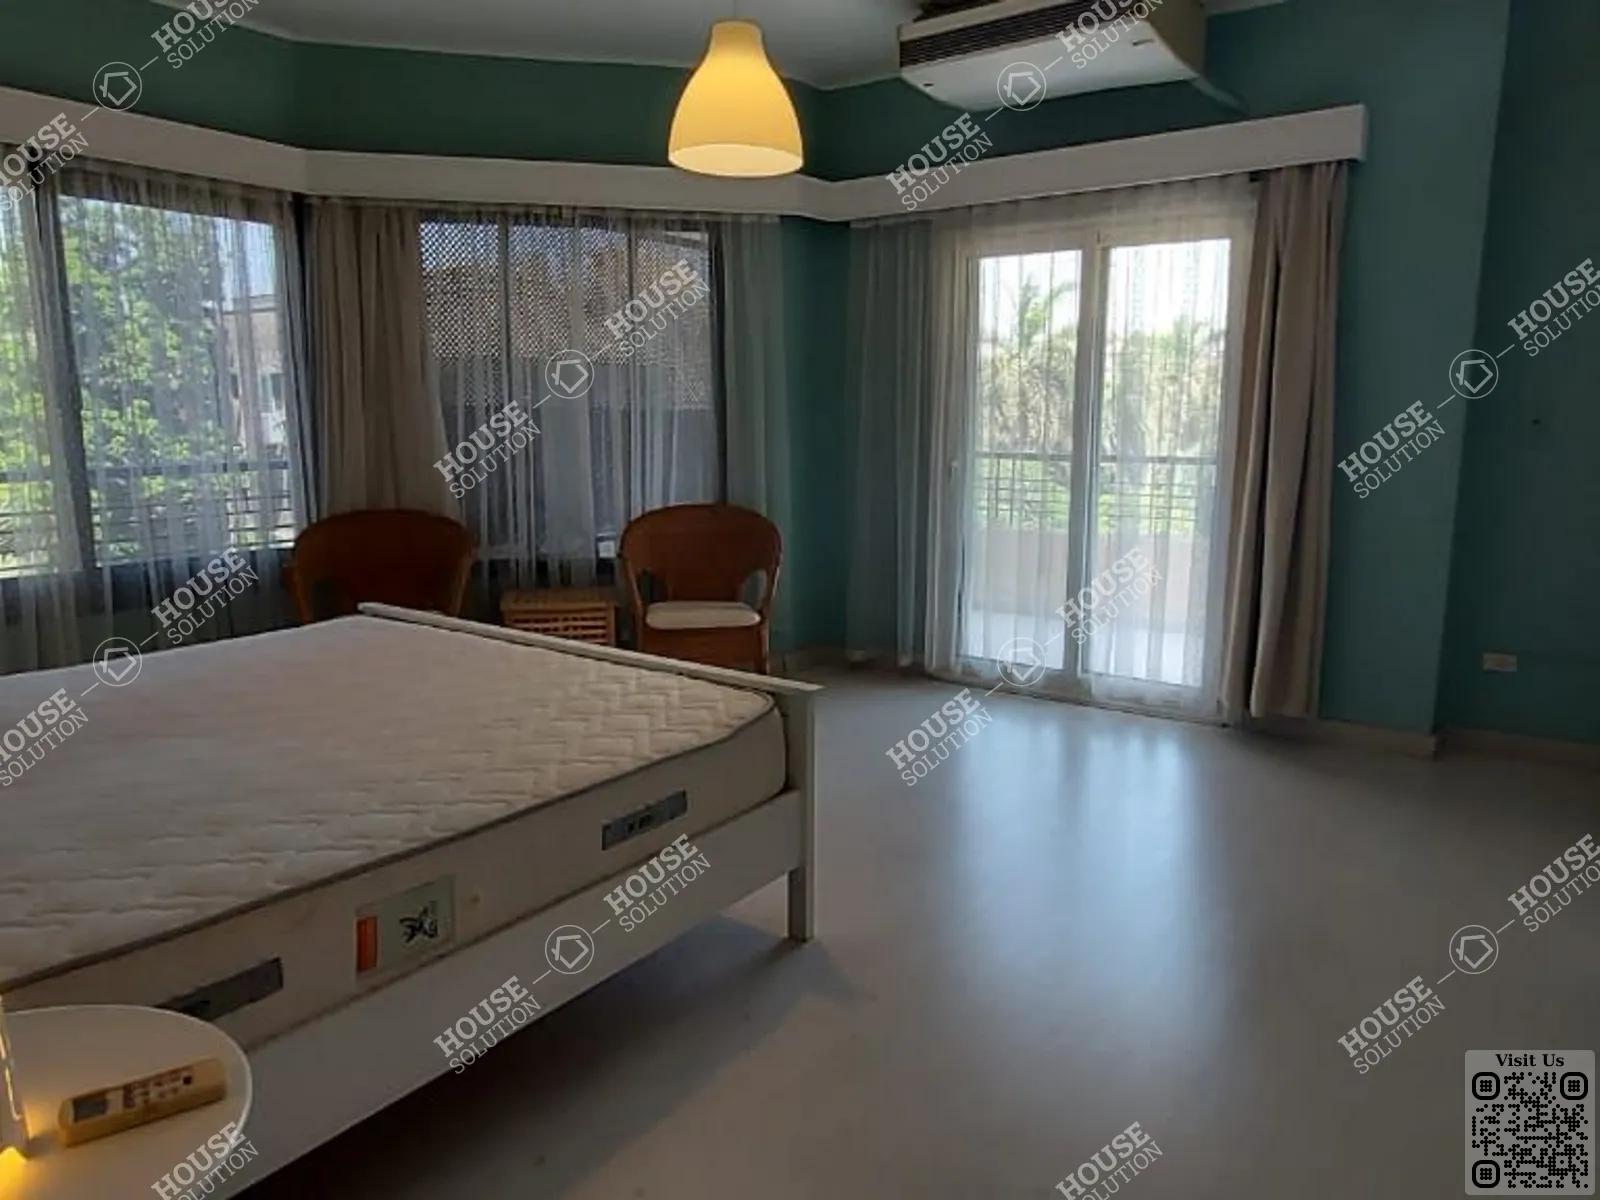 MASTER BEDROOM  @ Apartments For Rent In Maadi Maadi Sarayat Area: 200 m² consists of 3 Bedrooms 2 Bathrooms Modern furnished 5 stars #5529-1